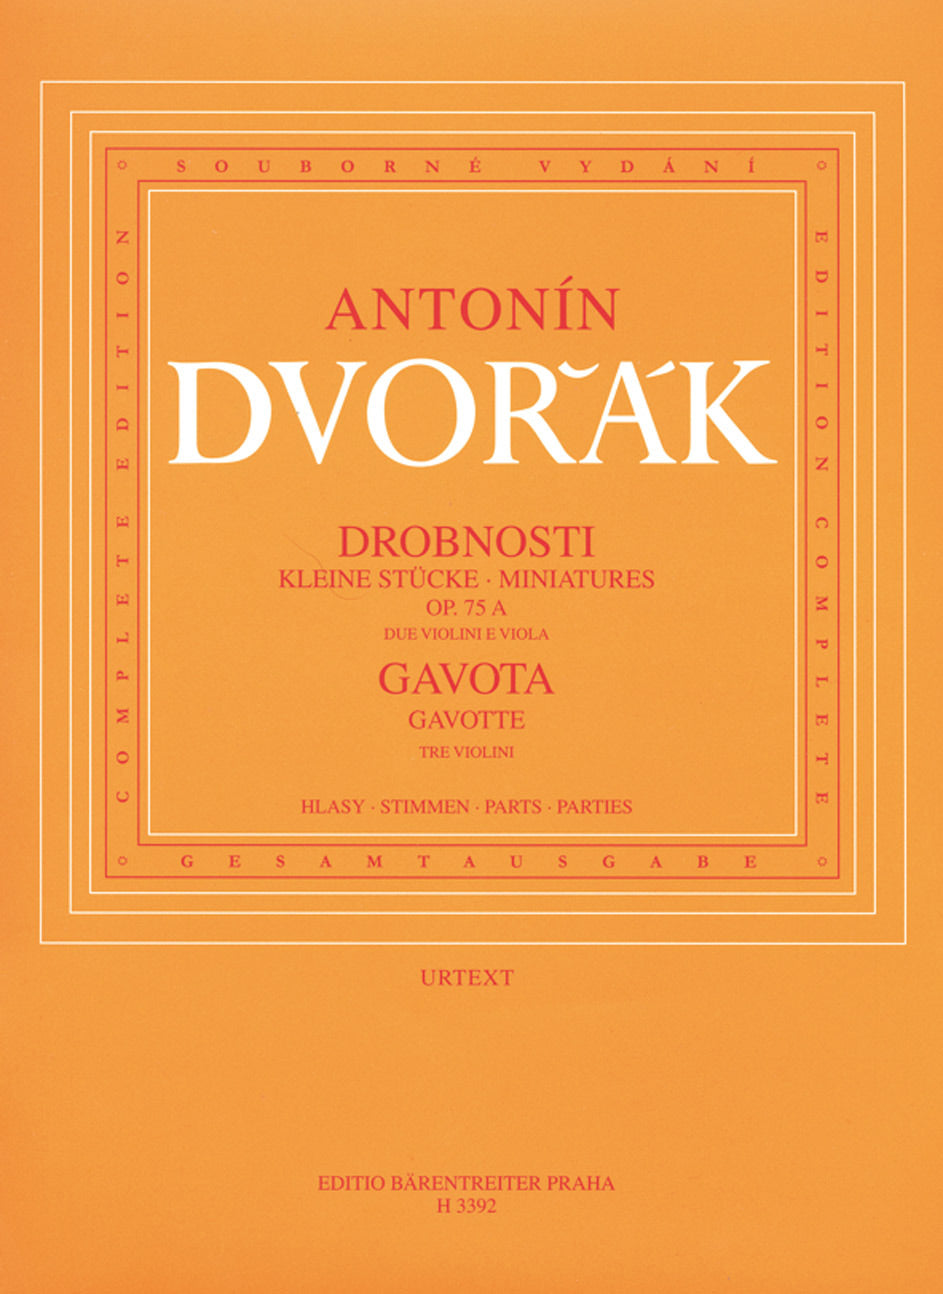 Dvorak Kleine Stücke (Miniatures) Op. 75a and Gavotte B164